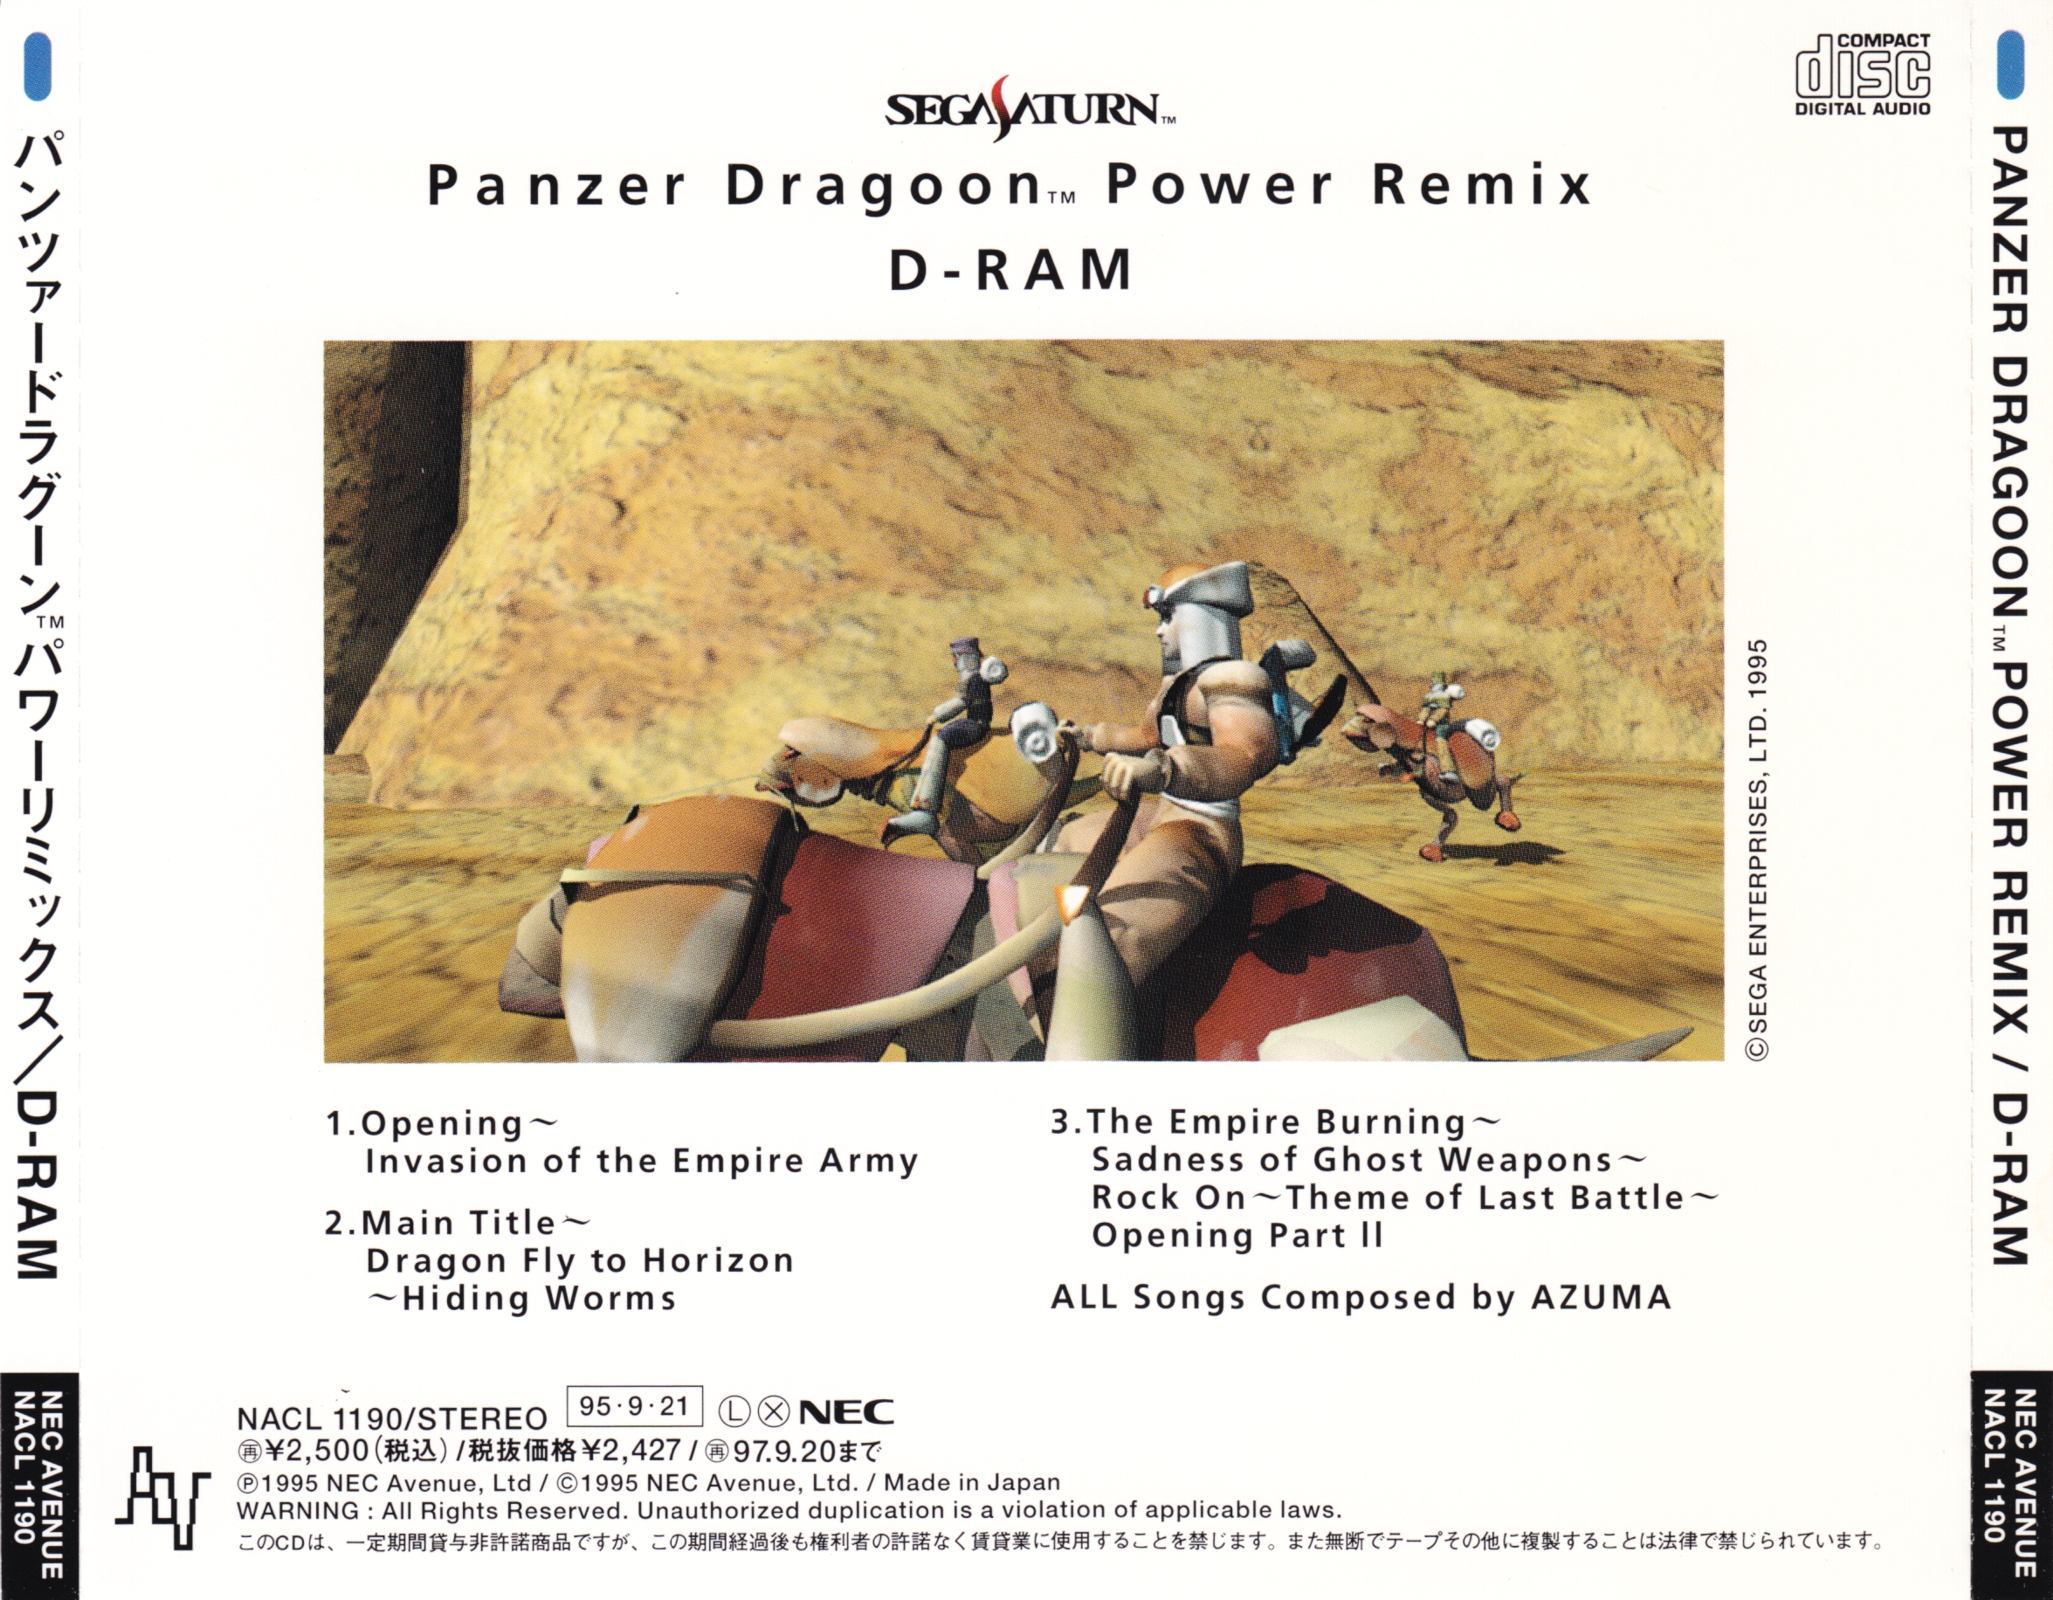 PanzerDragoonPowerRemix Album JP Box Back.jpg